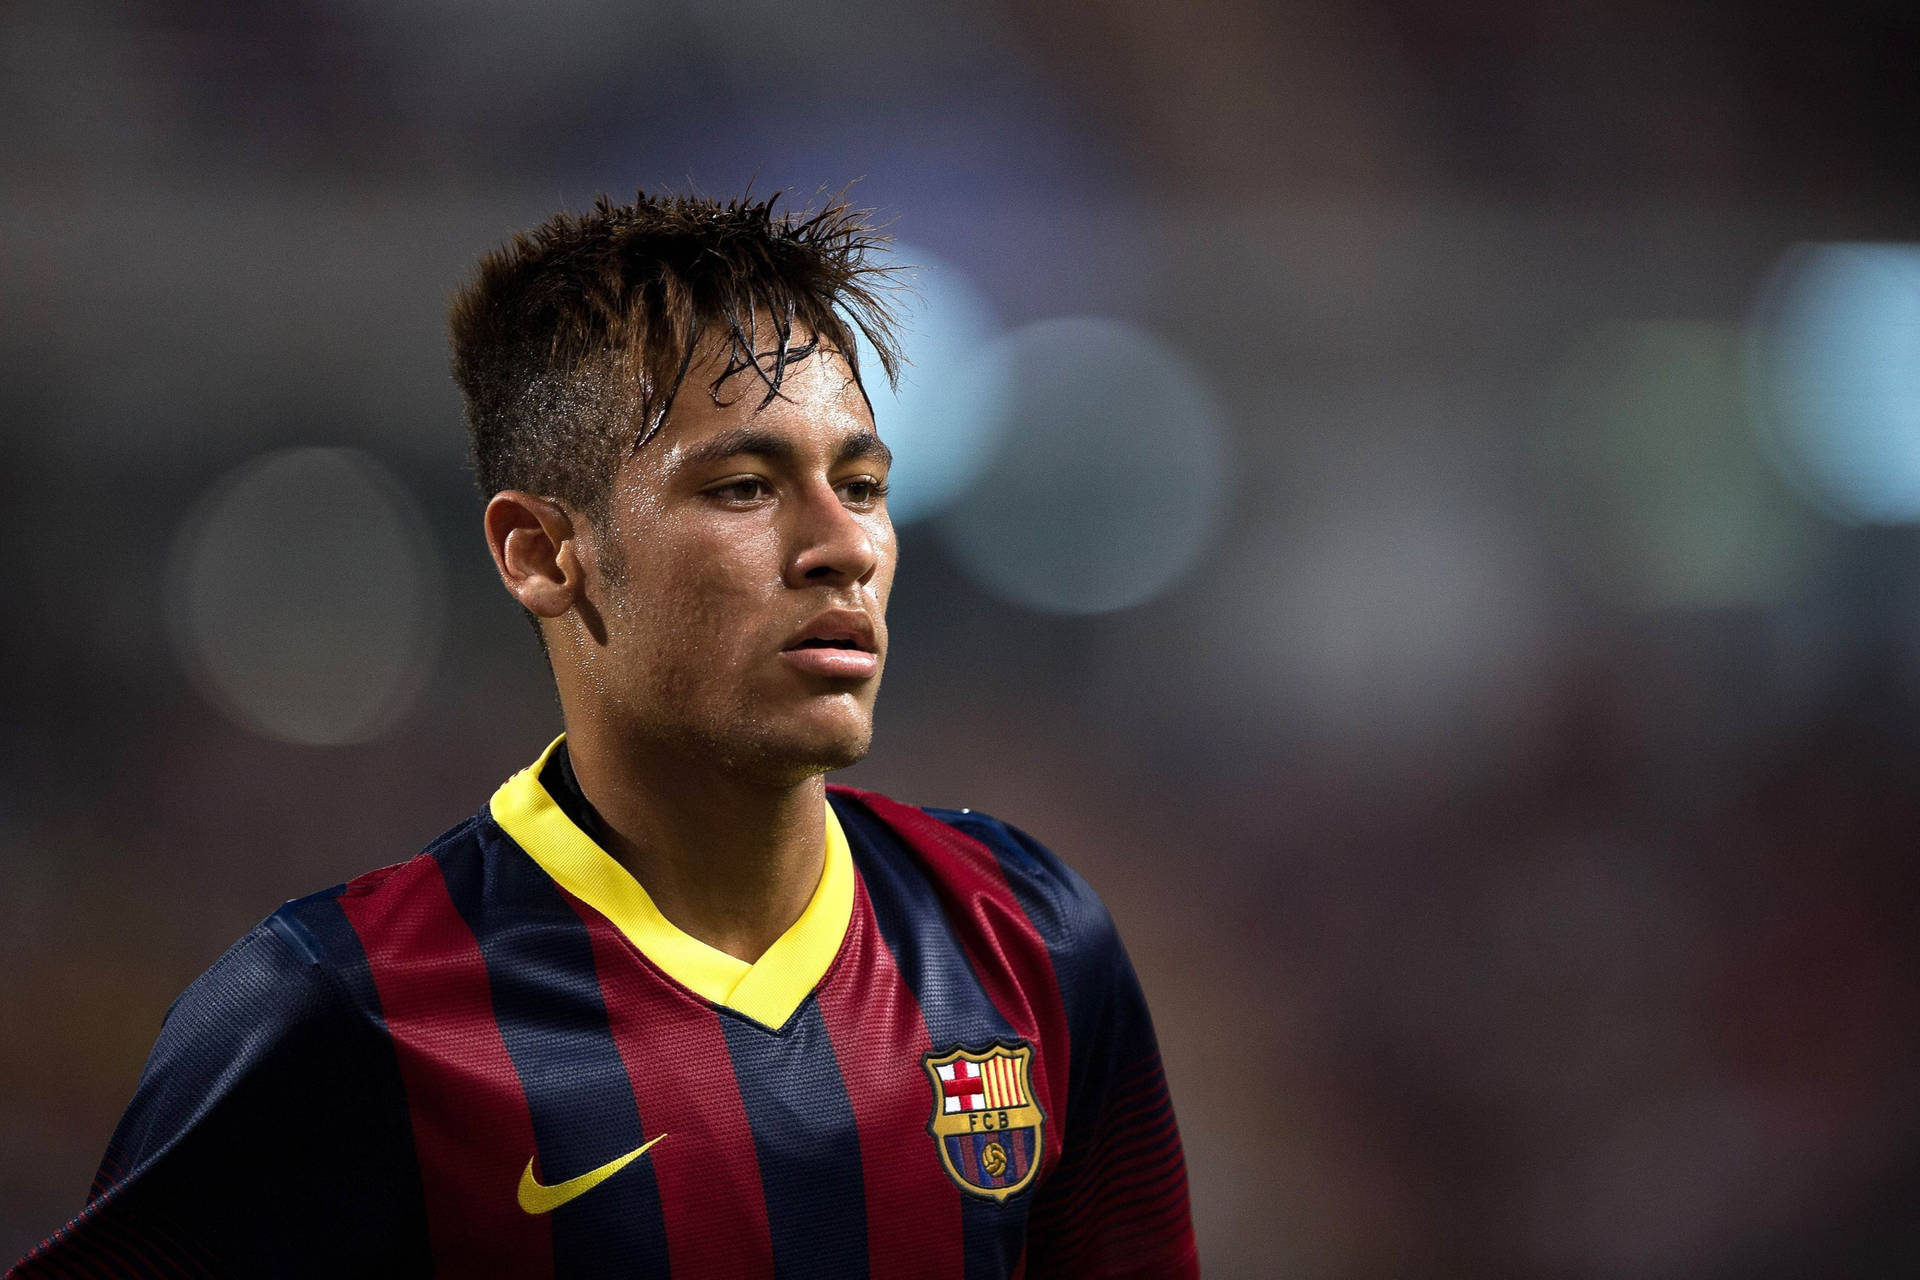 Neymar Jr. In Action - High Definition 4k Wallpaper Wallpaper